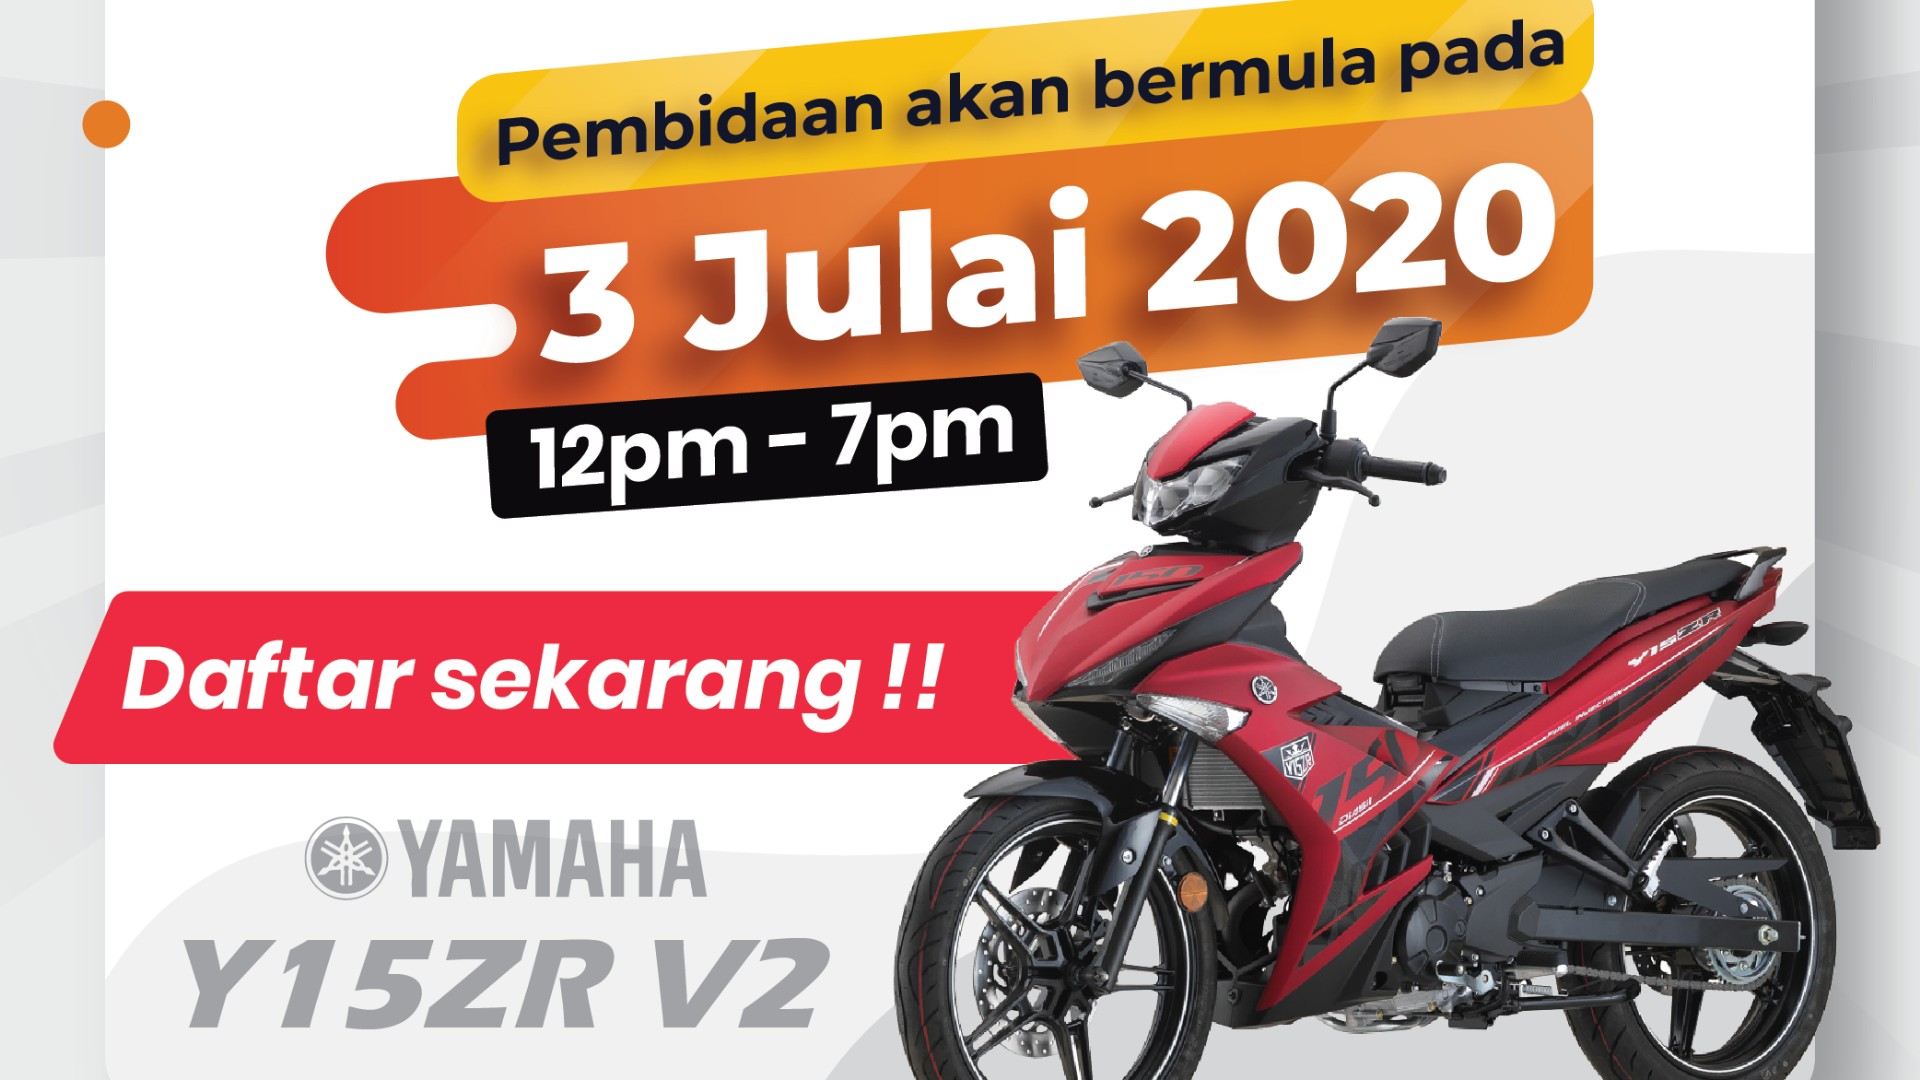 Yamaha Y15ZR V2 RM 888